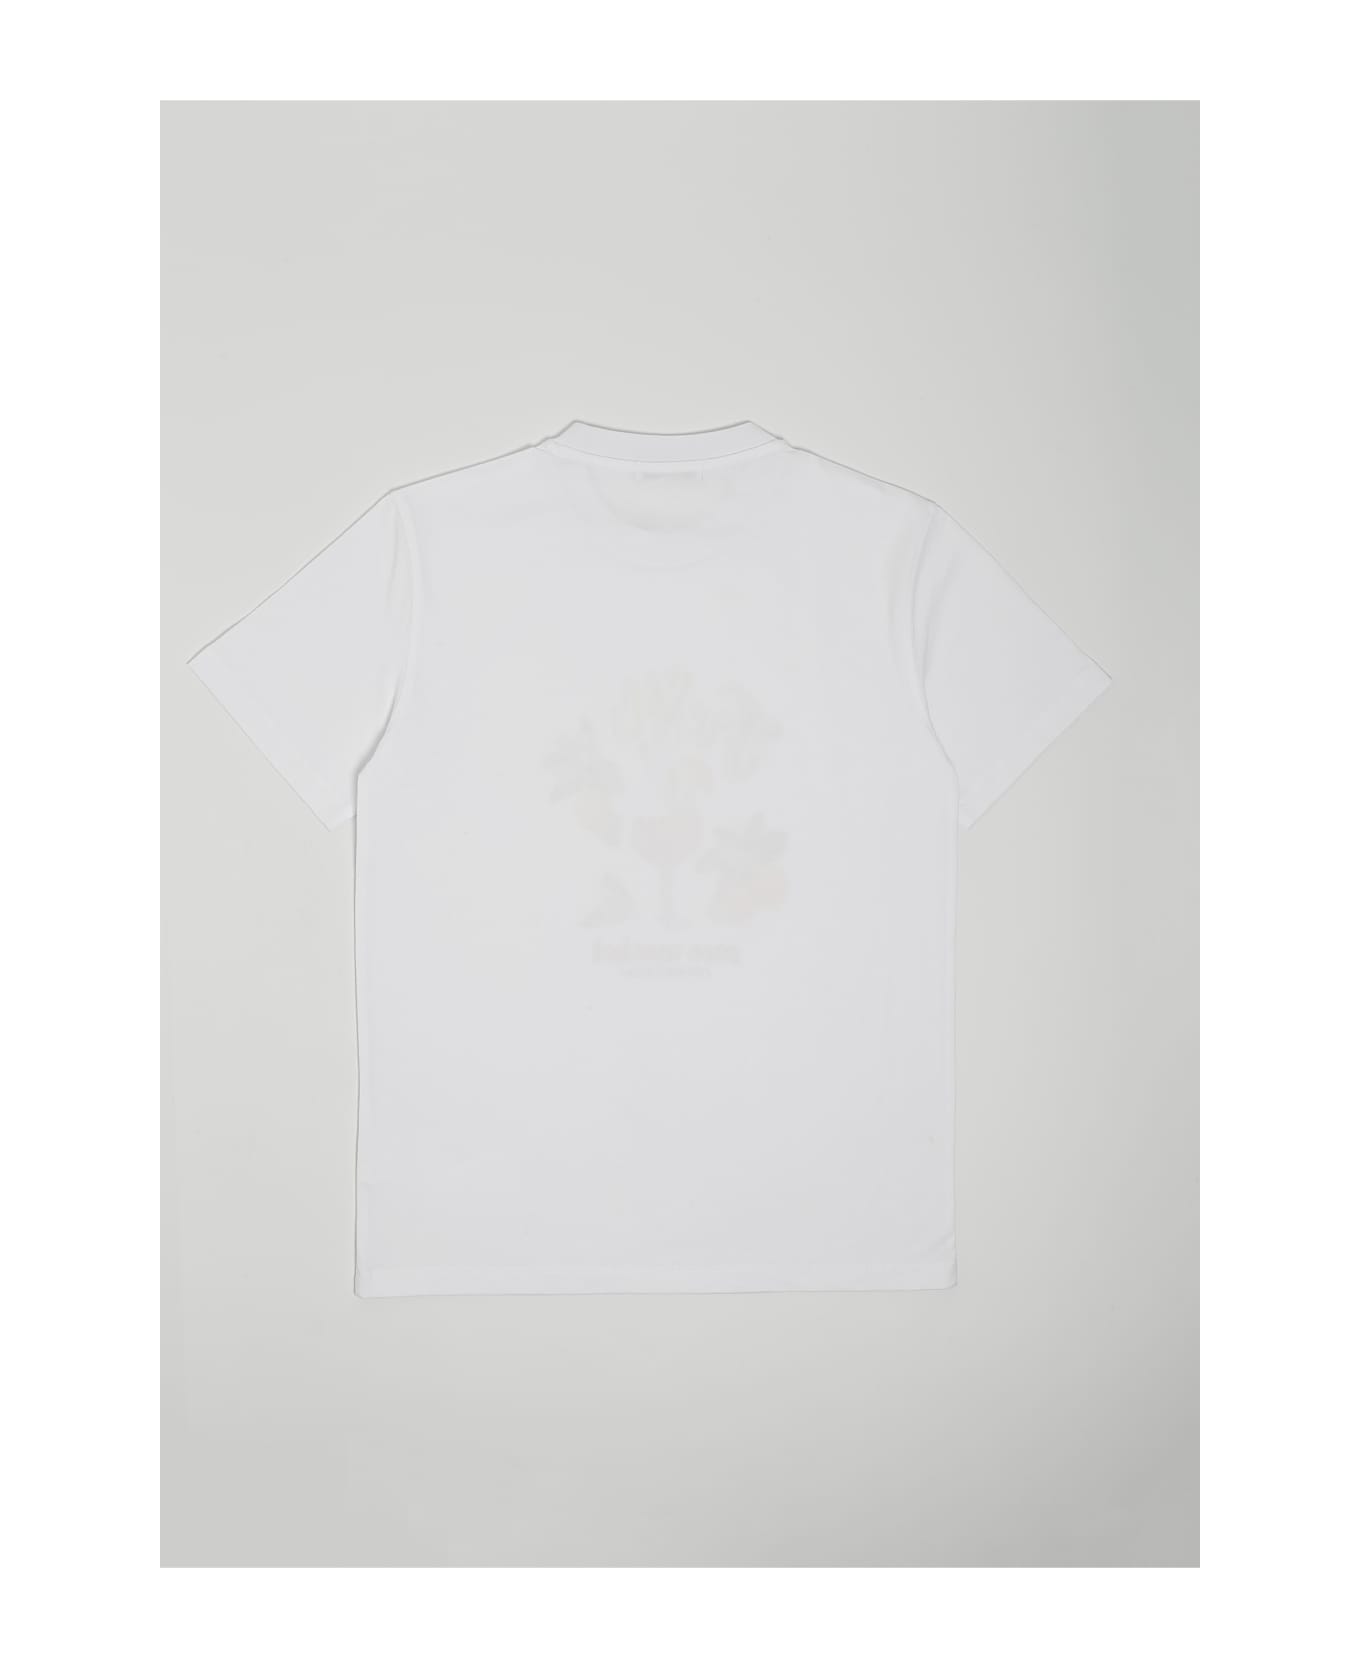 Jeckerson T-shirt T-shirt - BIANCO Tシャツ＆ポロシャツ